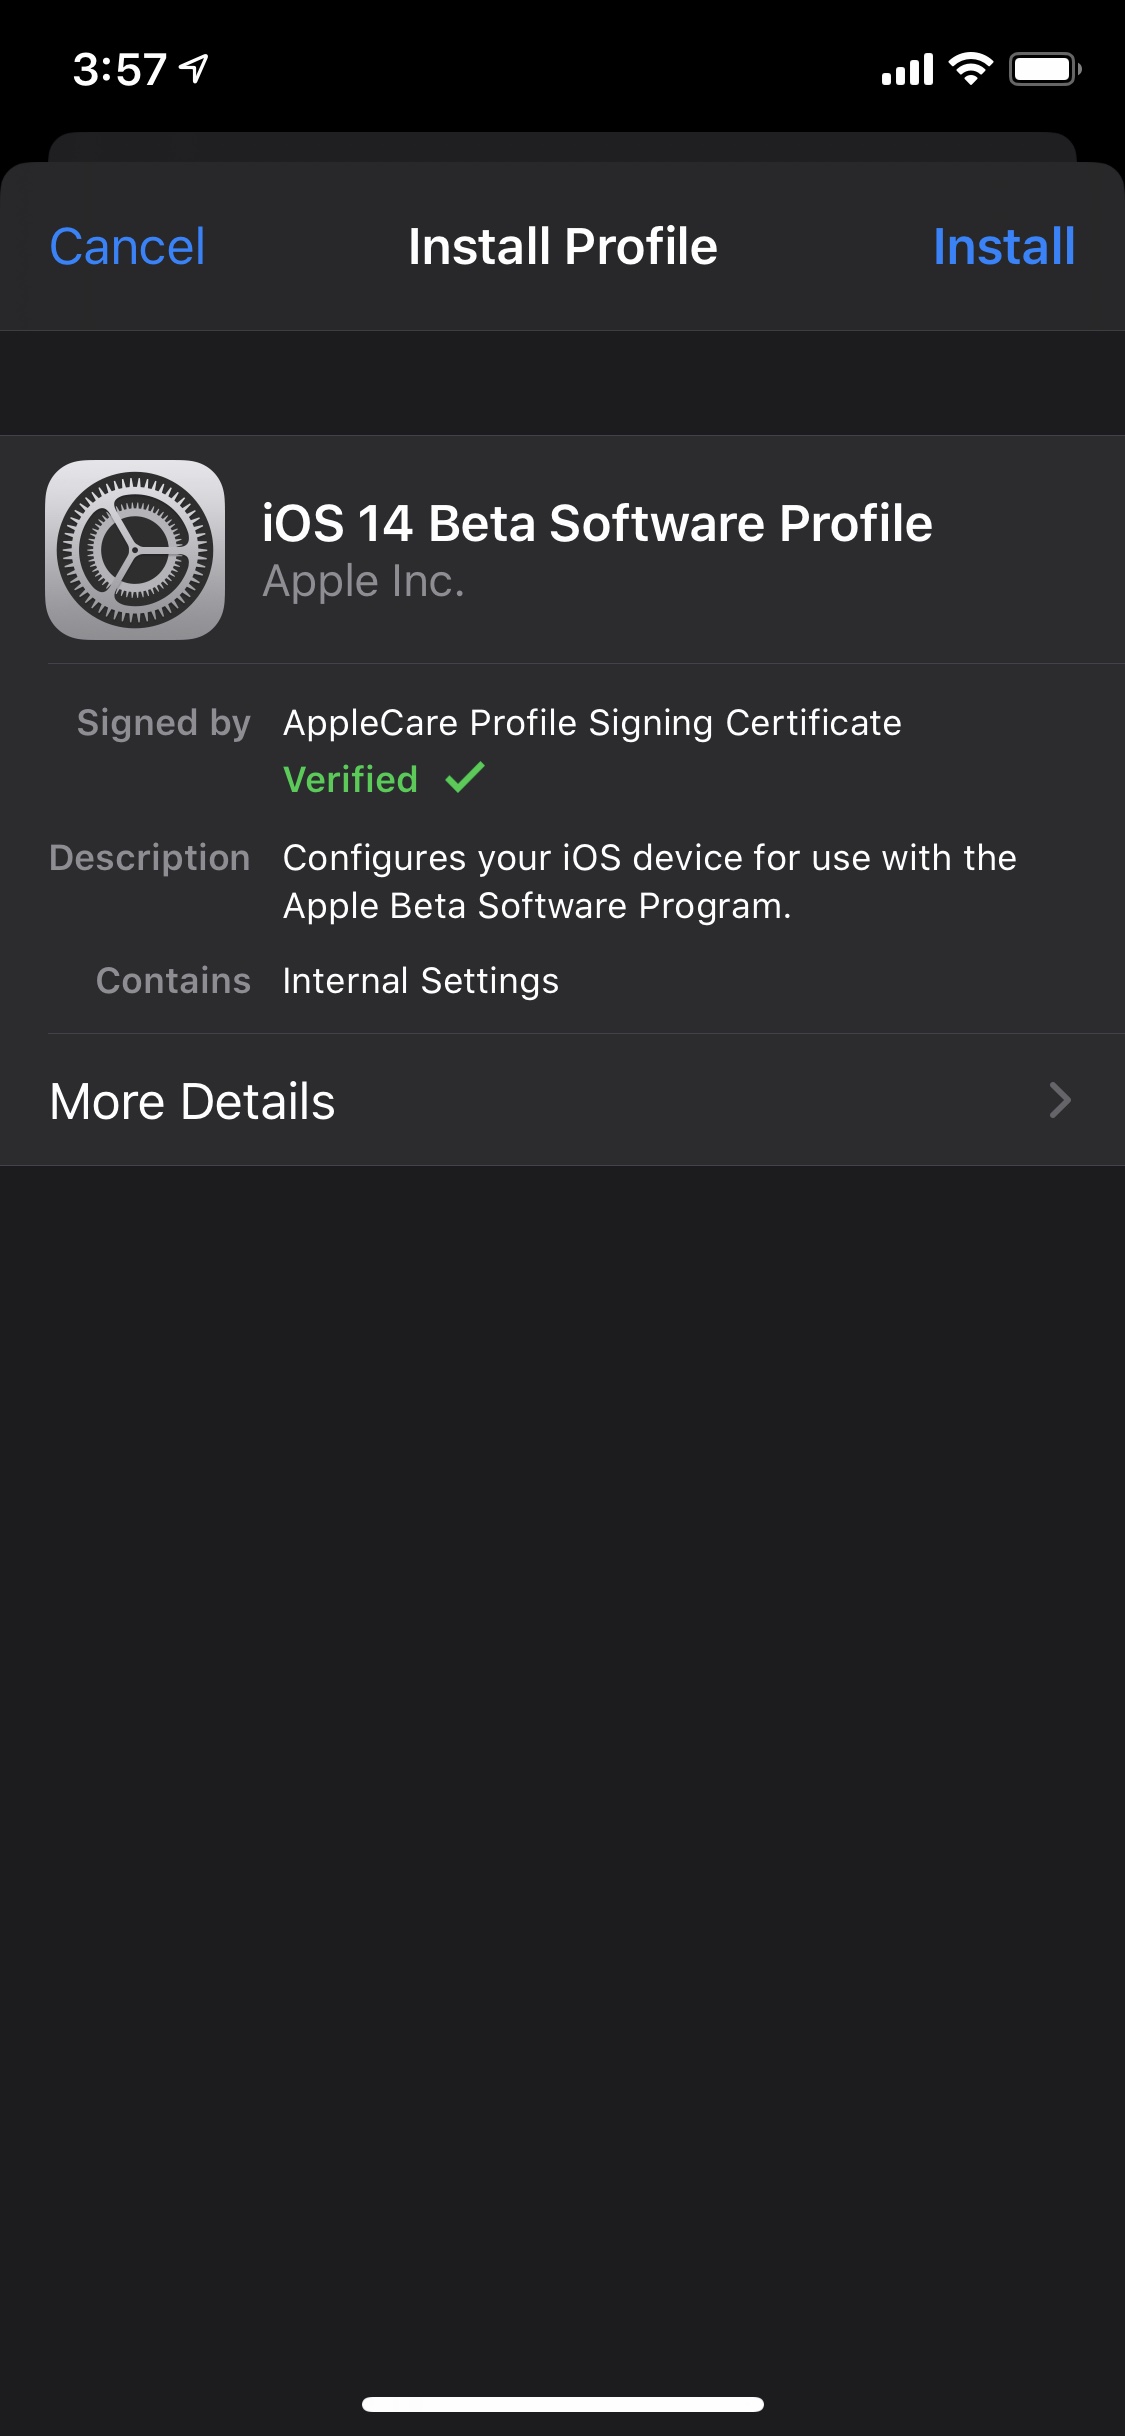 iOS 14 Beta Software Profile done